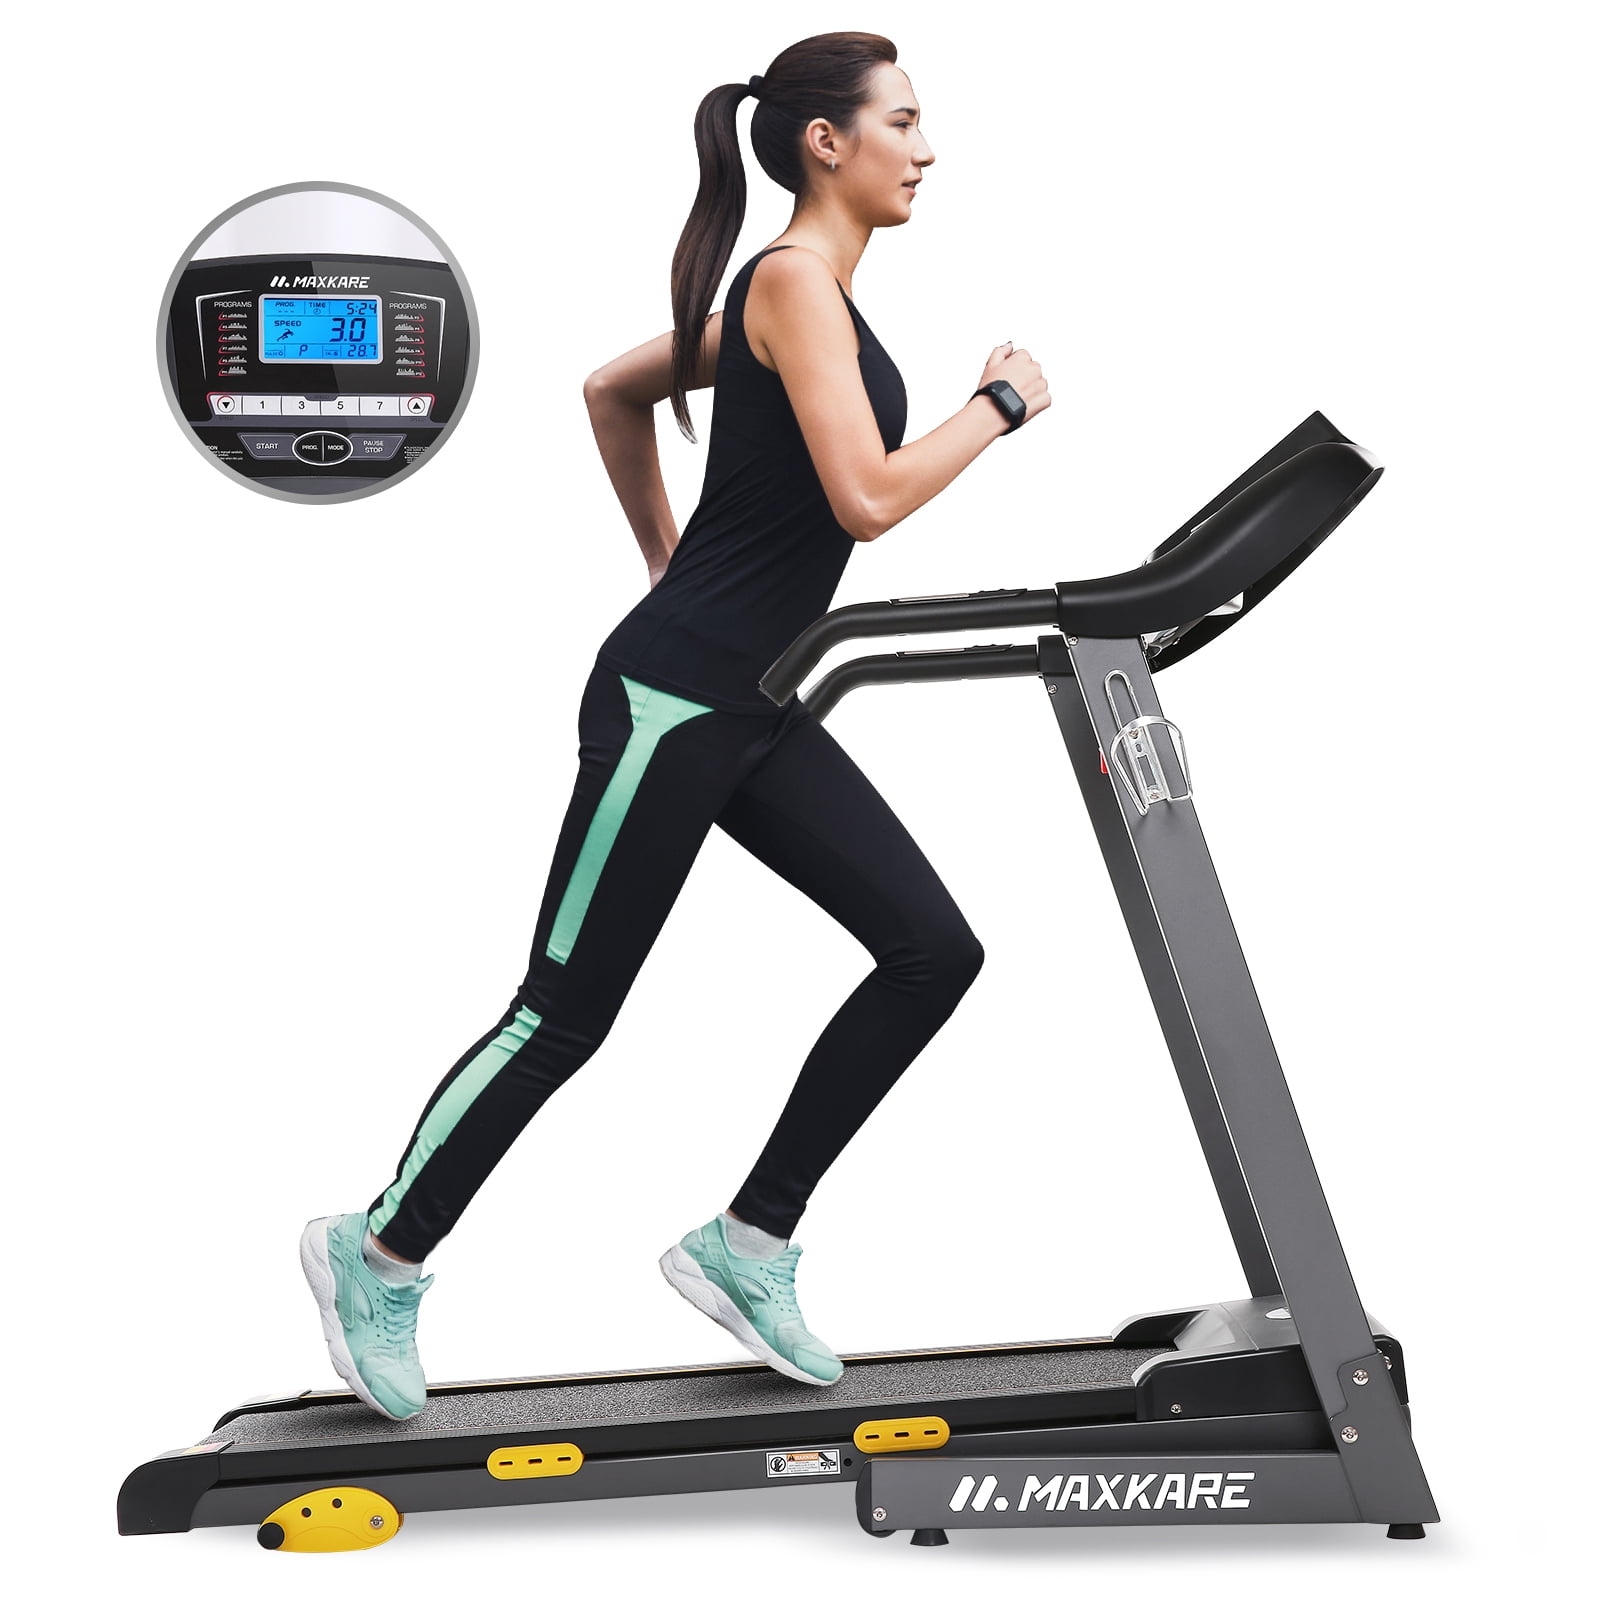 Manual Folding Treadmill Cardio Workout Caminadora Adjustable Incline Machine 